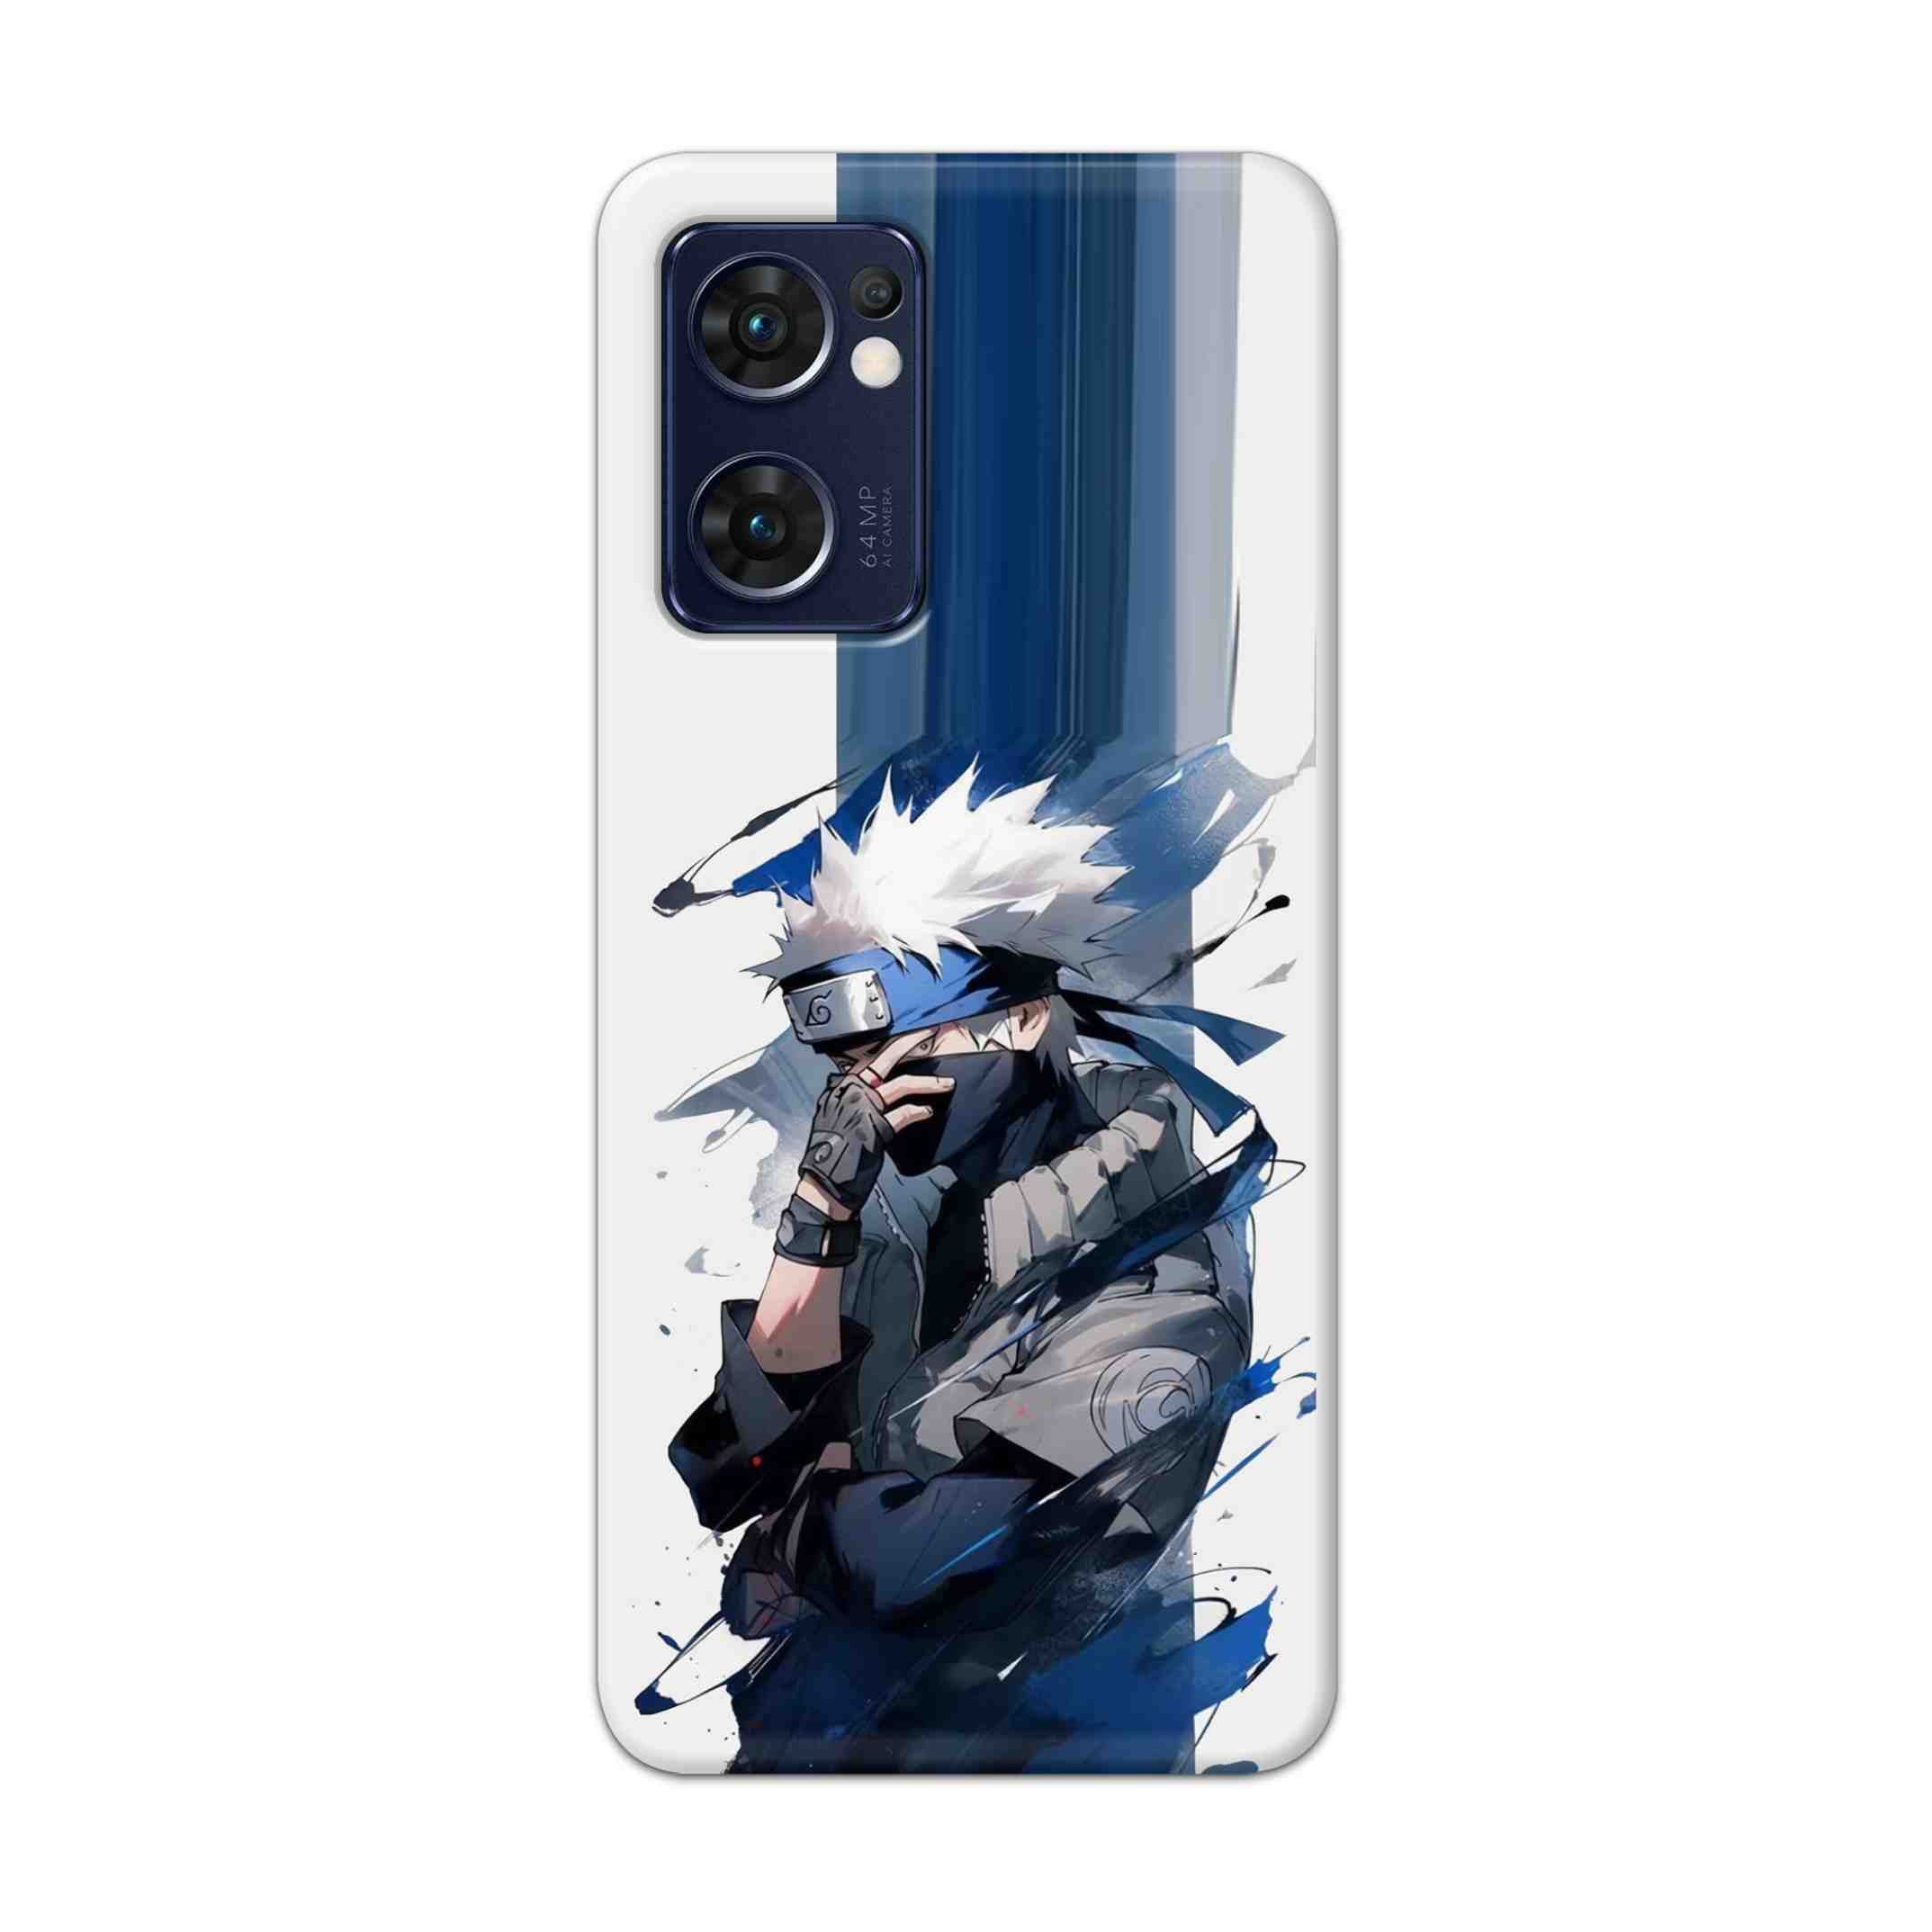 Buy Kakachi Hard Back Mobile Phone Case Cover For Reno 7 5G Online